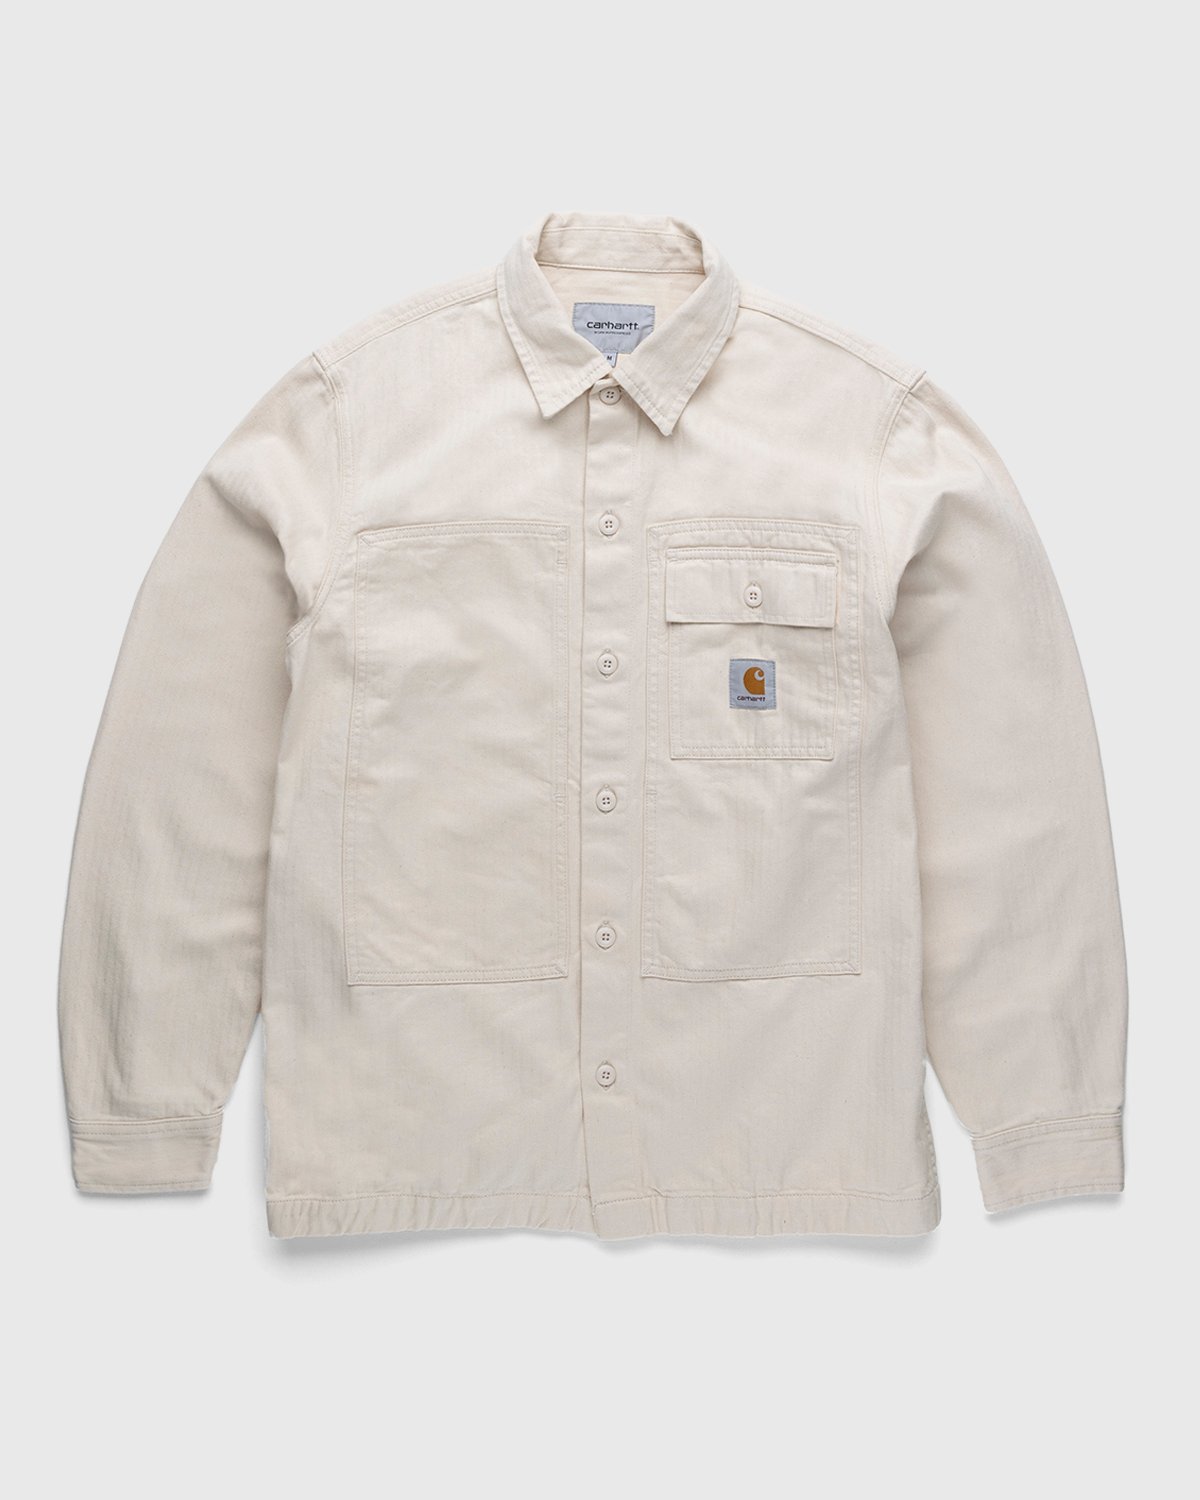 Carhartt WIP - Charter Shirt Natural - Clothing - Beige - Image 1